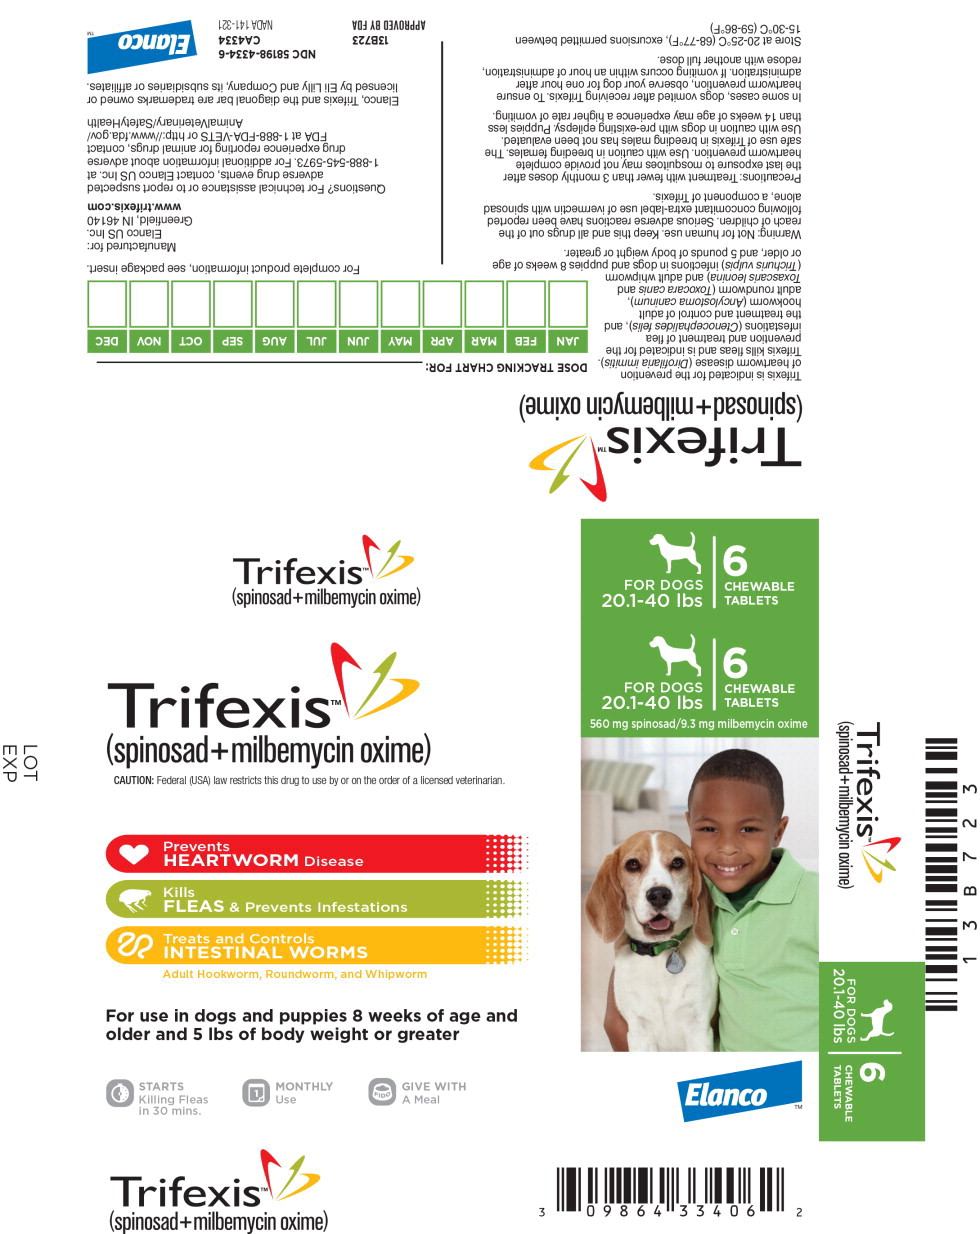 Principal Display Panel - Trifexis 810 mg Carton Label
